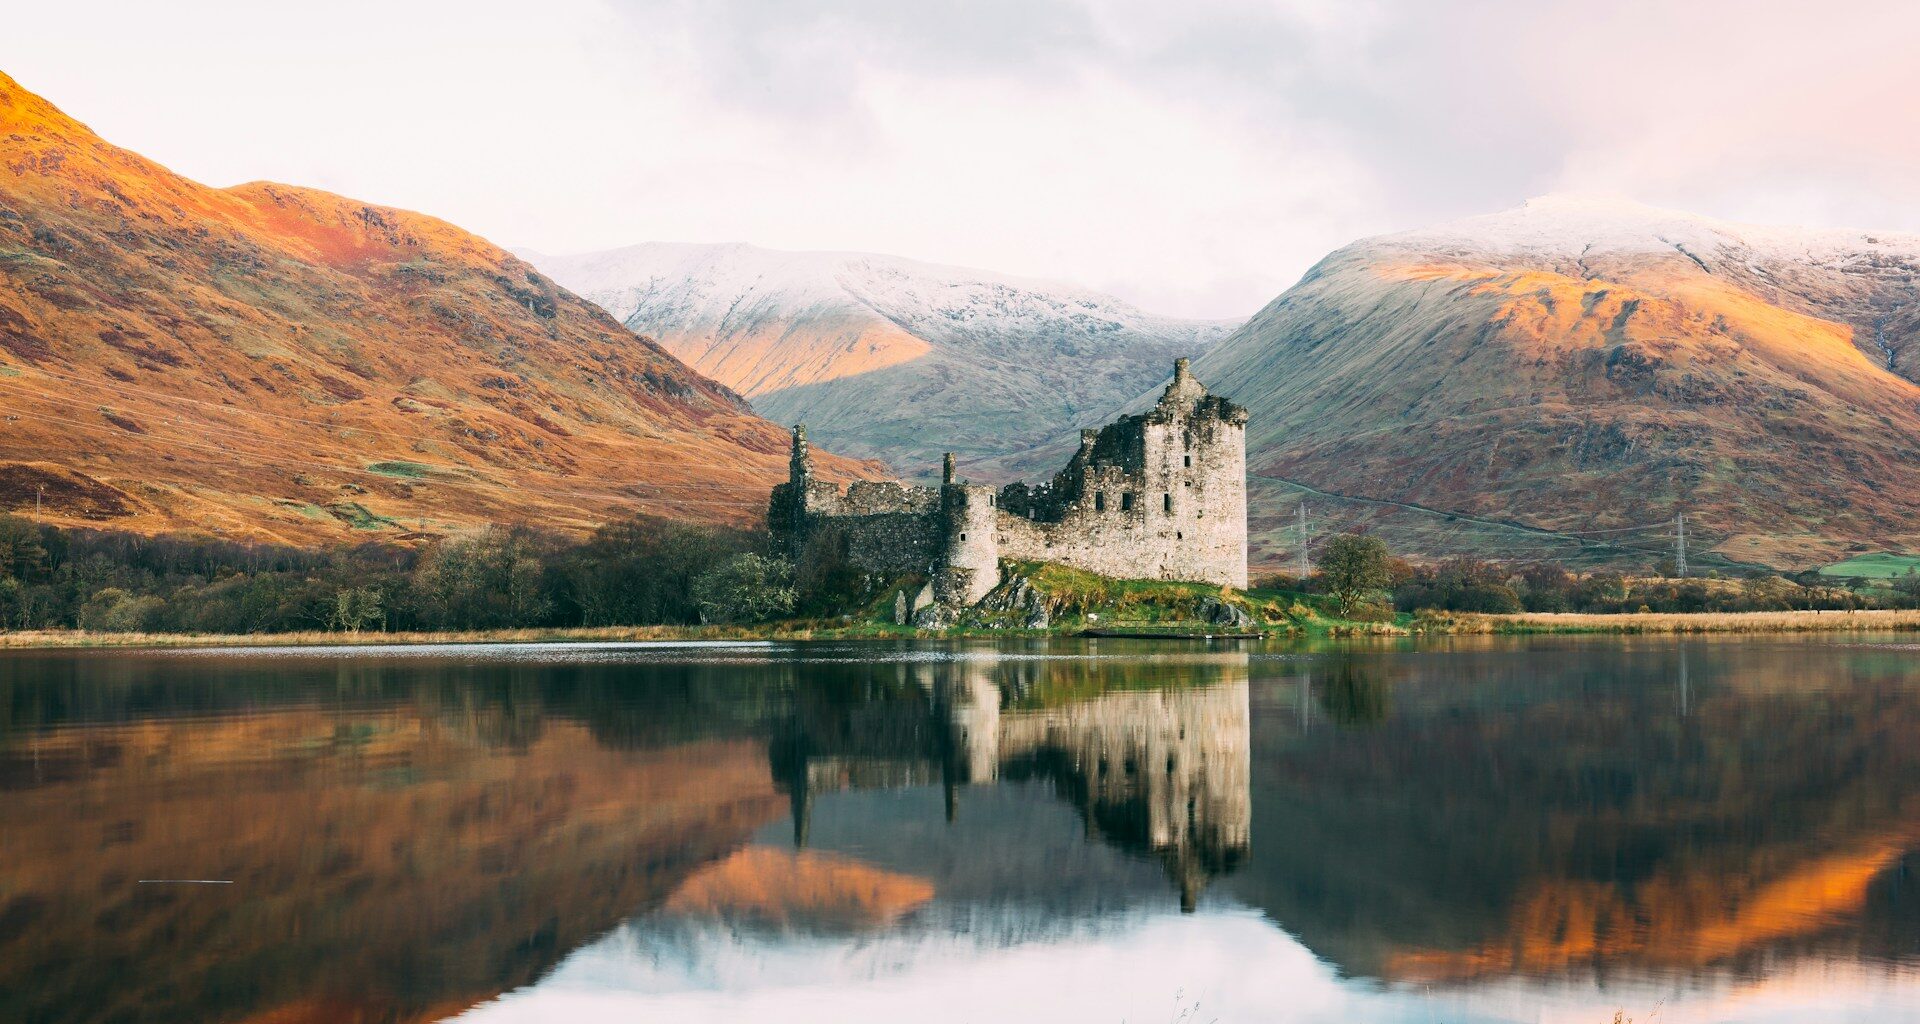 scotland castle on a lake